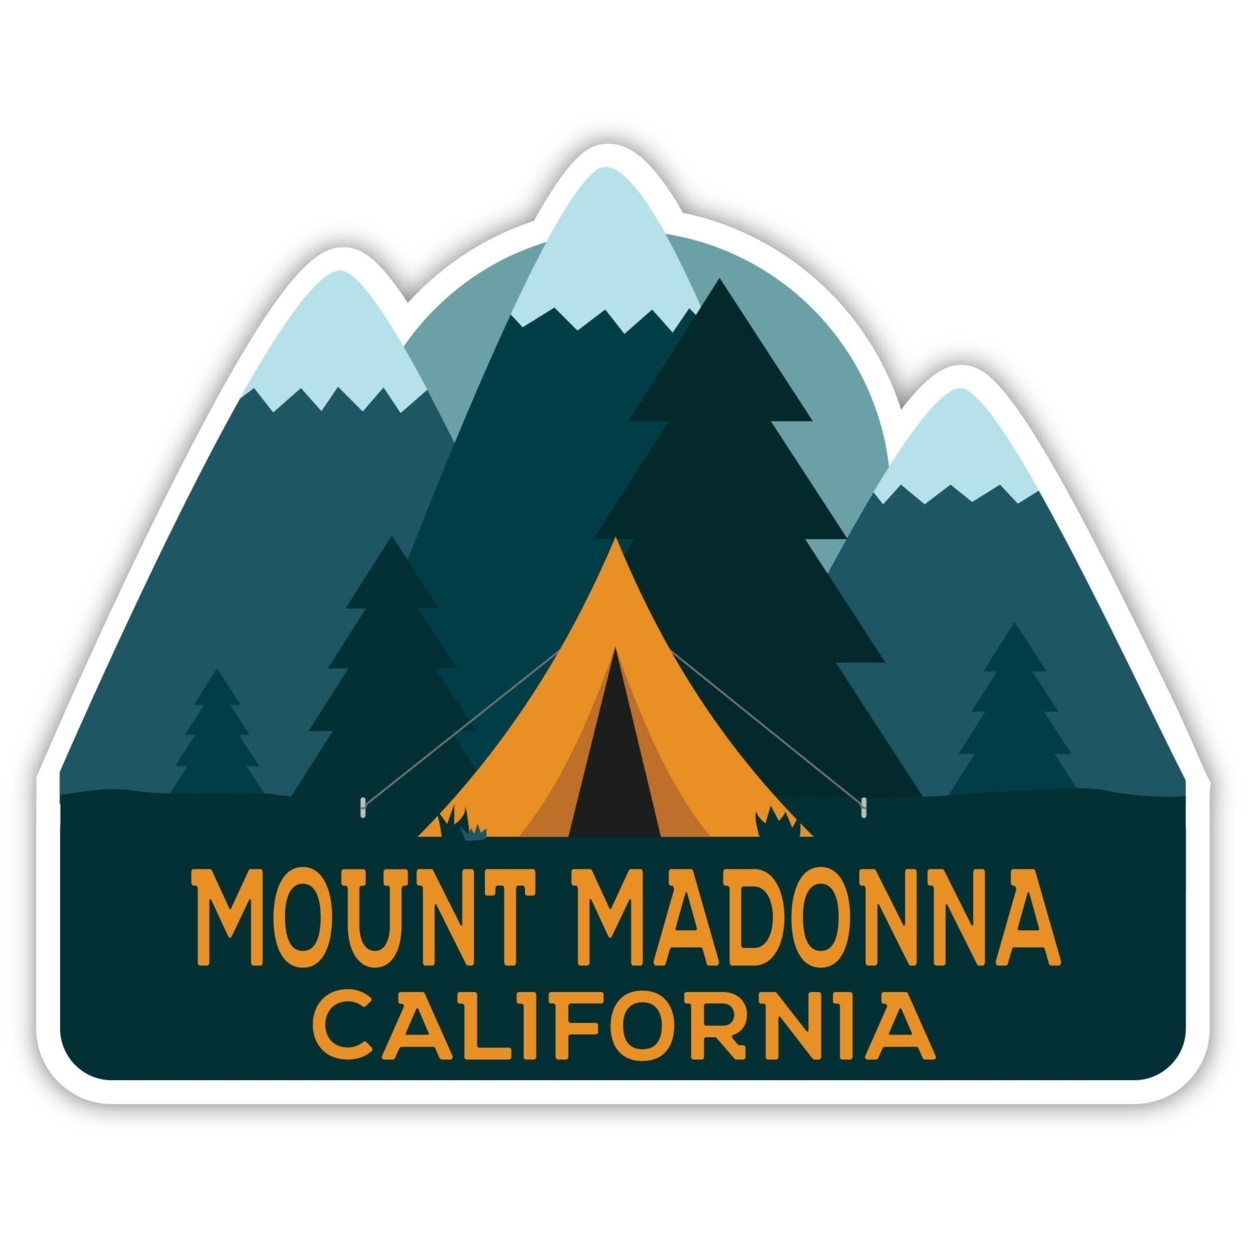 Mount Madonna California Souvenir Decorative Stickers (Choose Theme And Size) - Single Unit, 4-Inch, Adventures Awaits